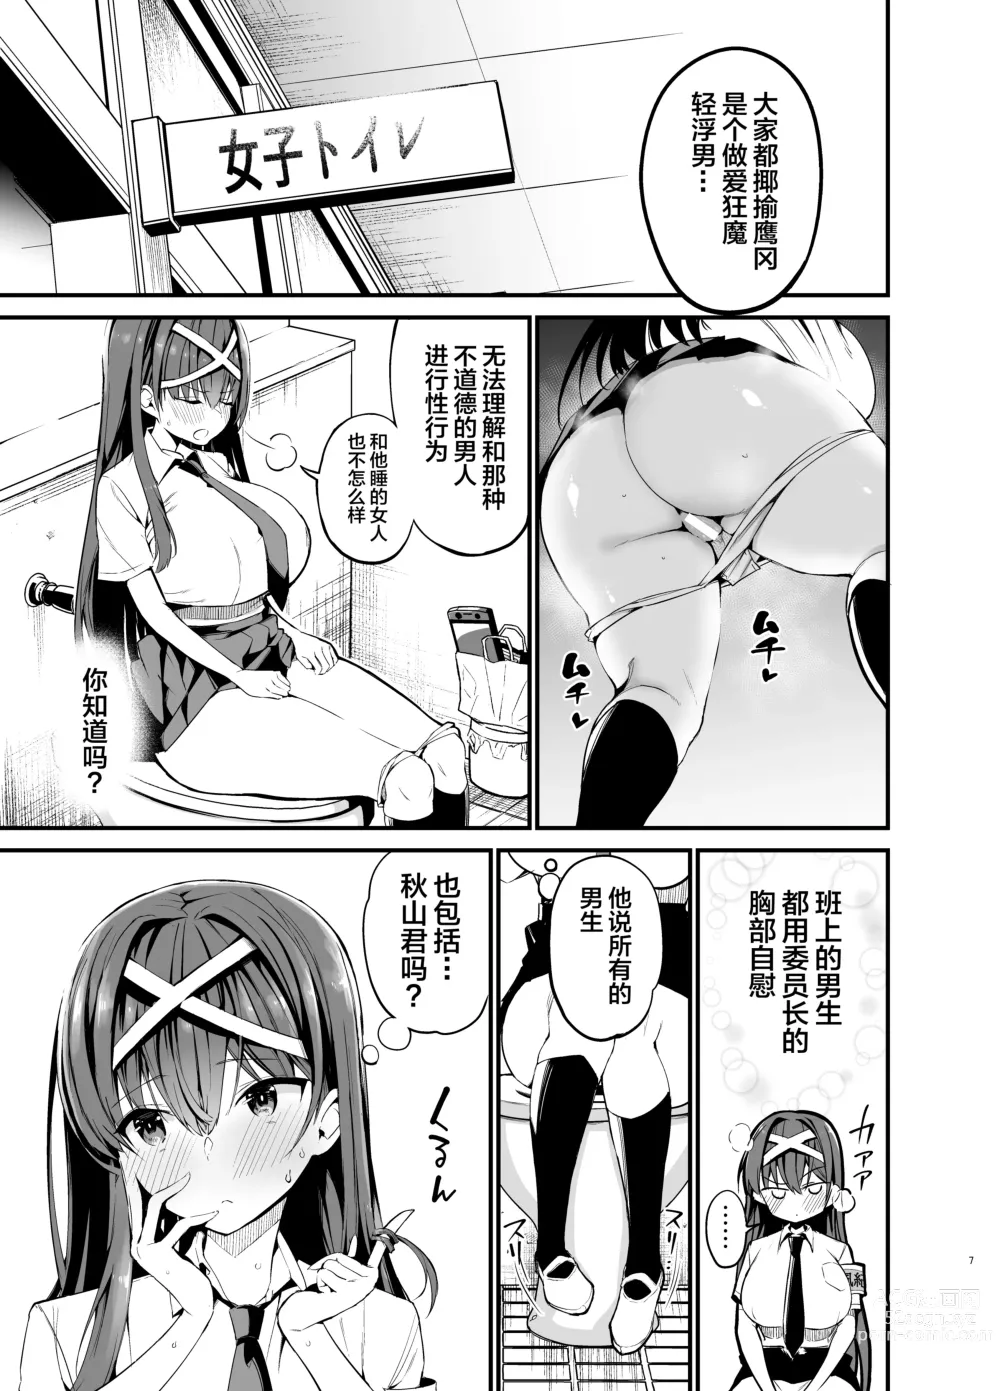 Page 6 of doujinshi Fuuki Iinchou ga Ochiru made